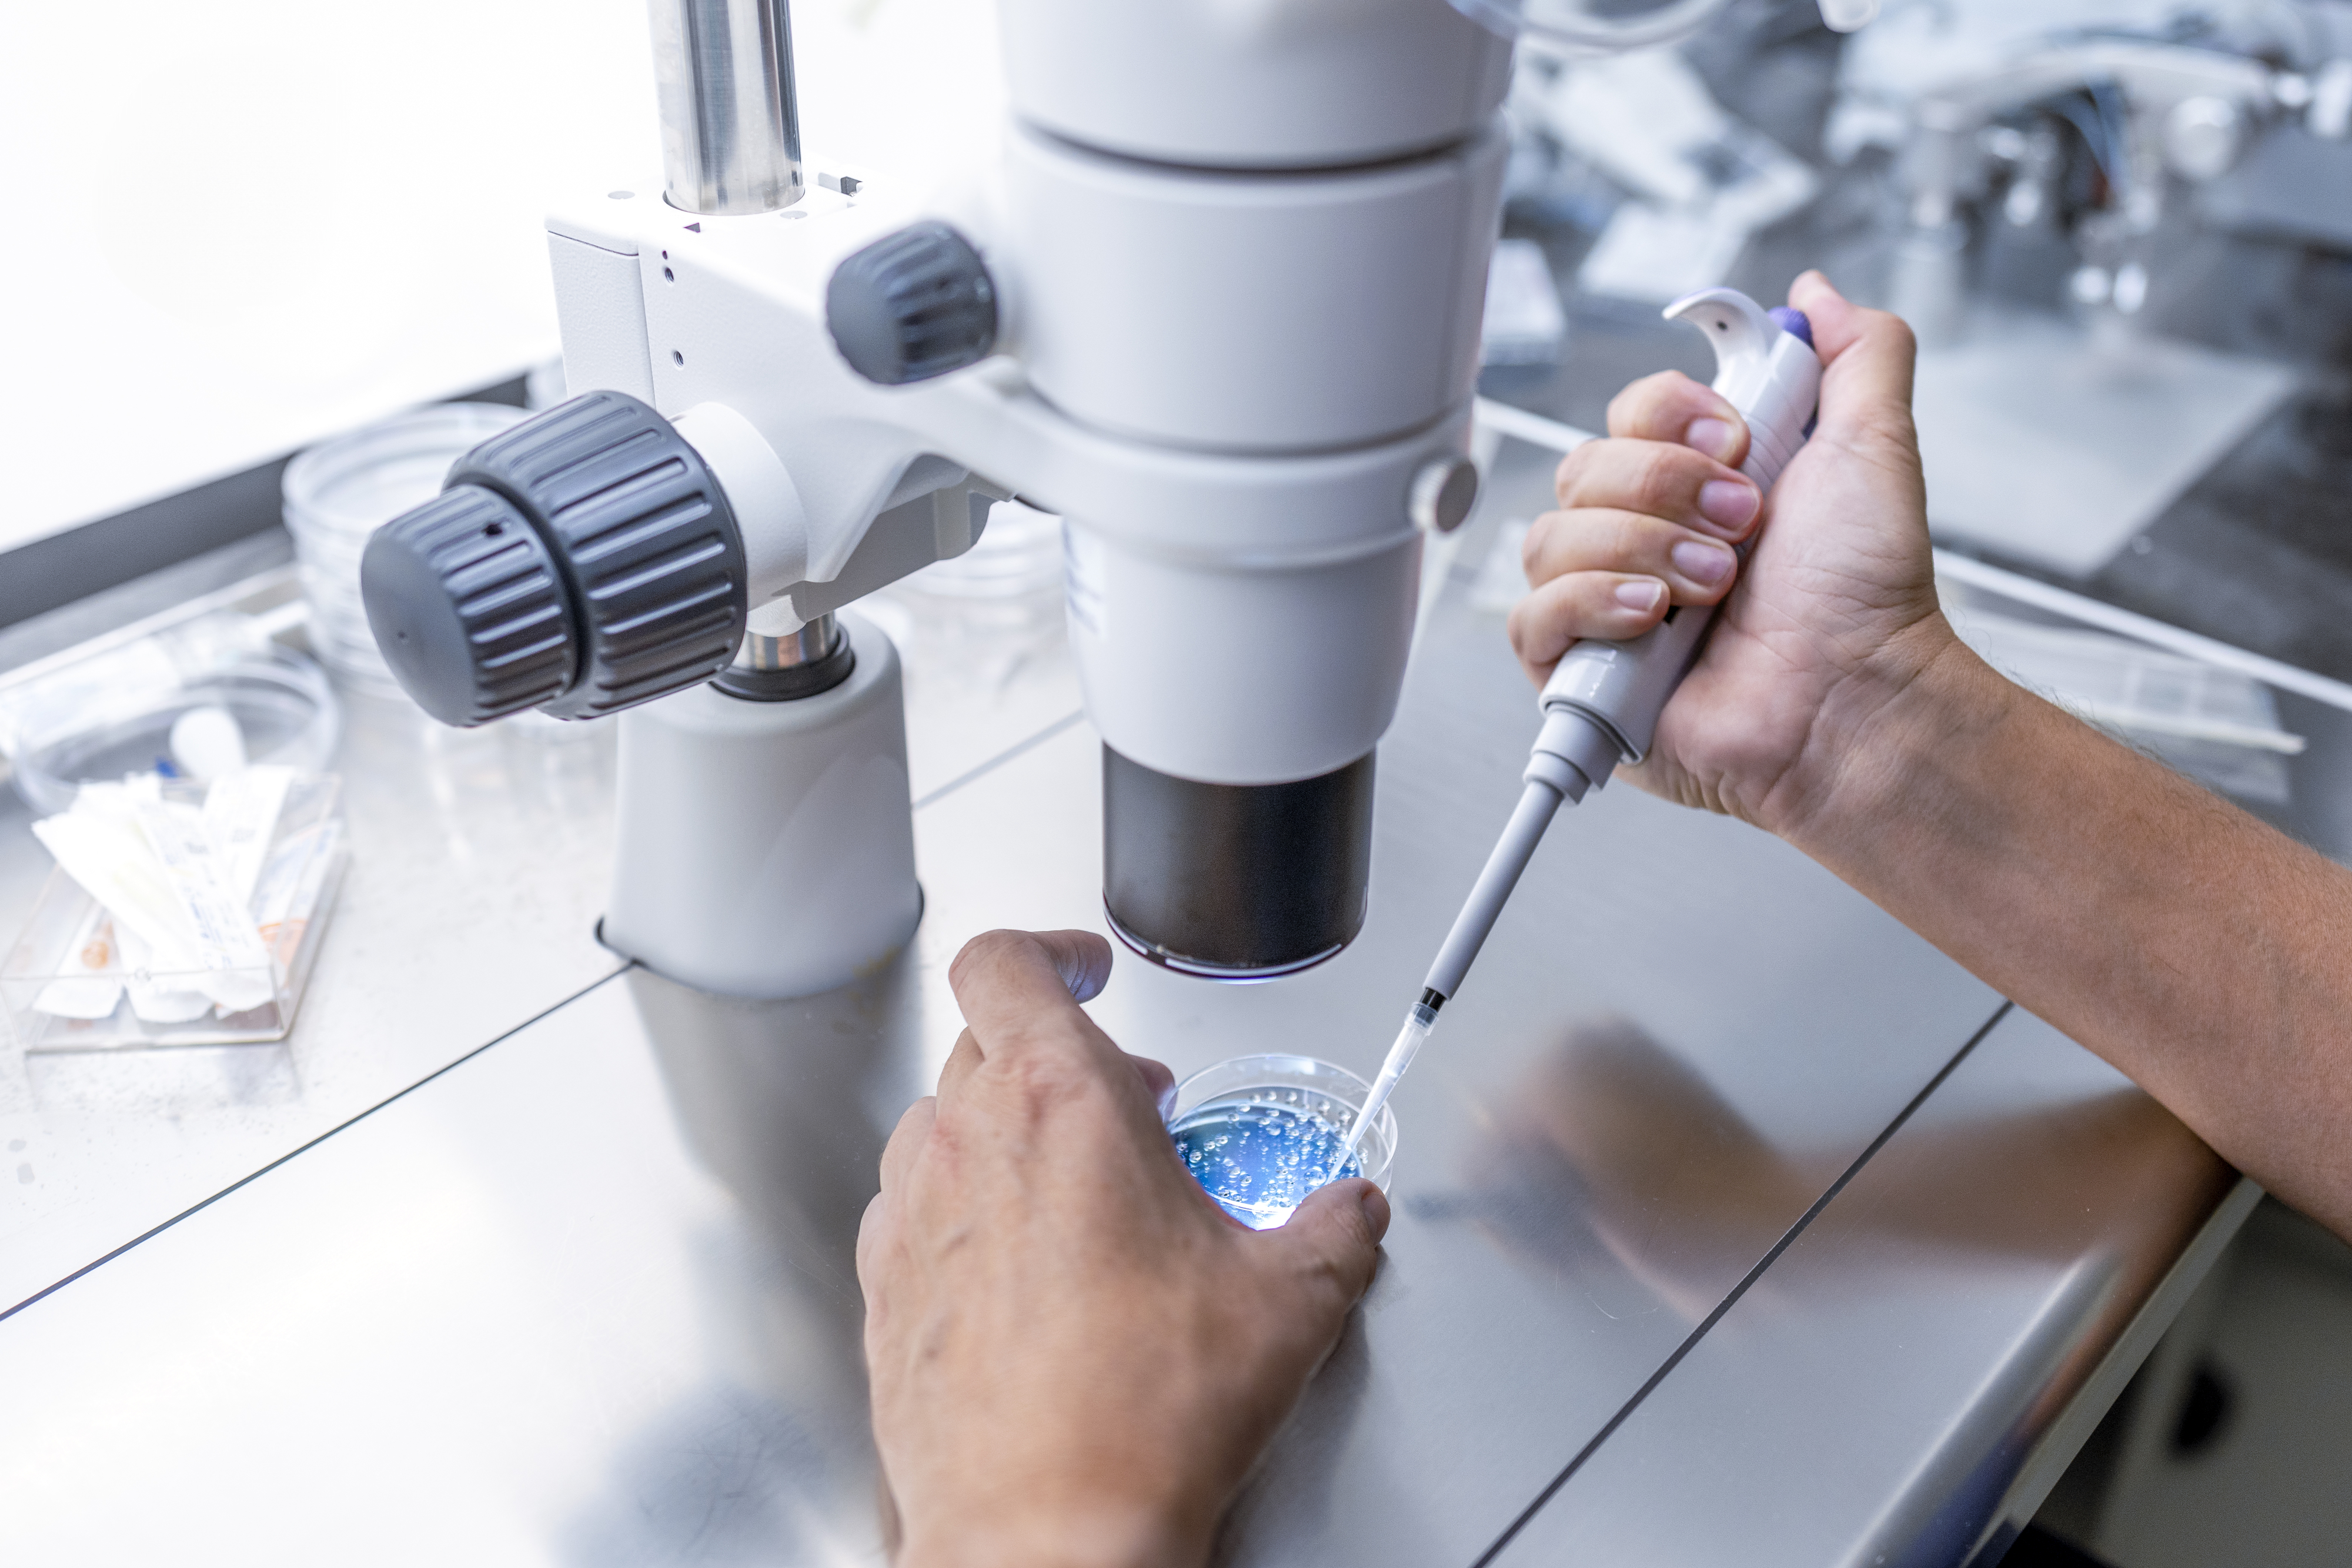 Person using a pipette and microscope in a laboratory setting for scientific research